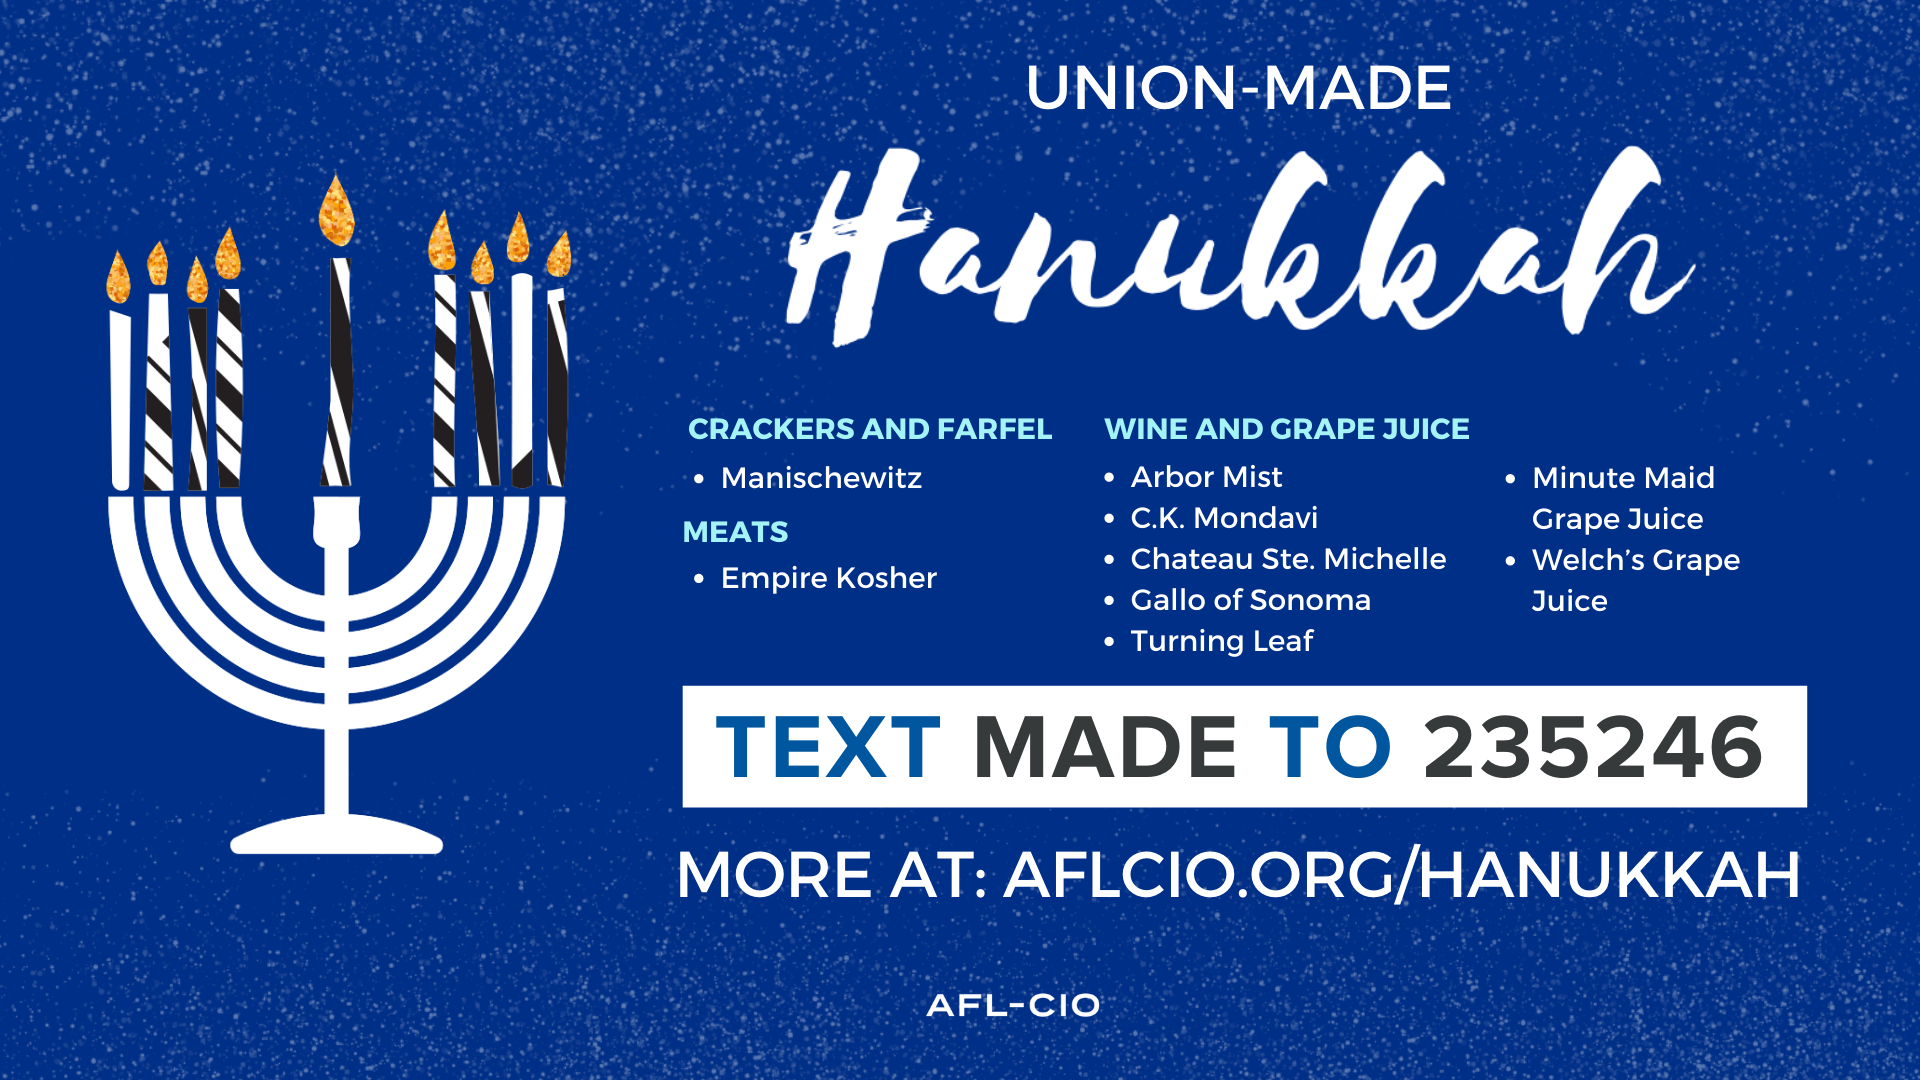 Union-Made Hanukkah